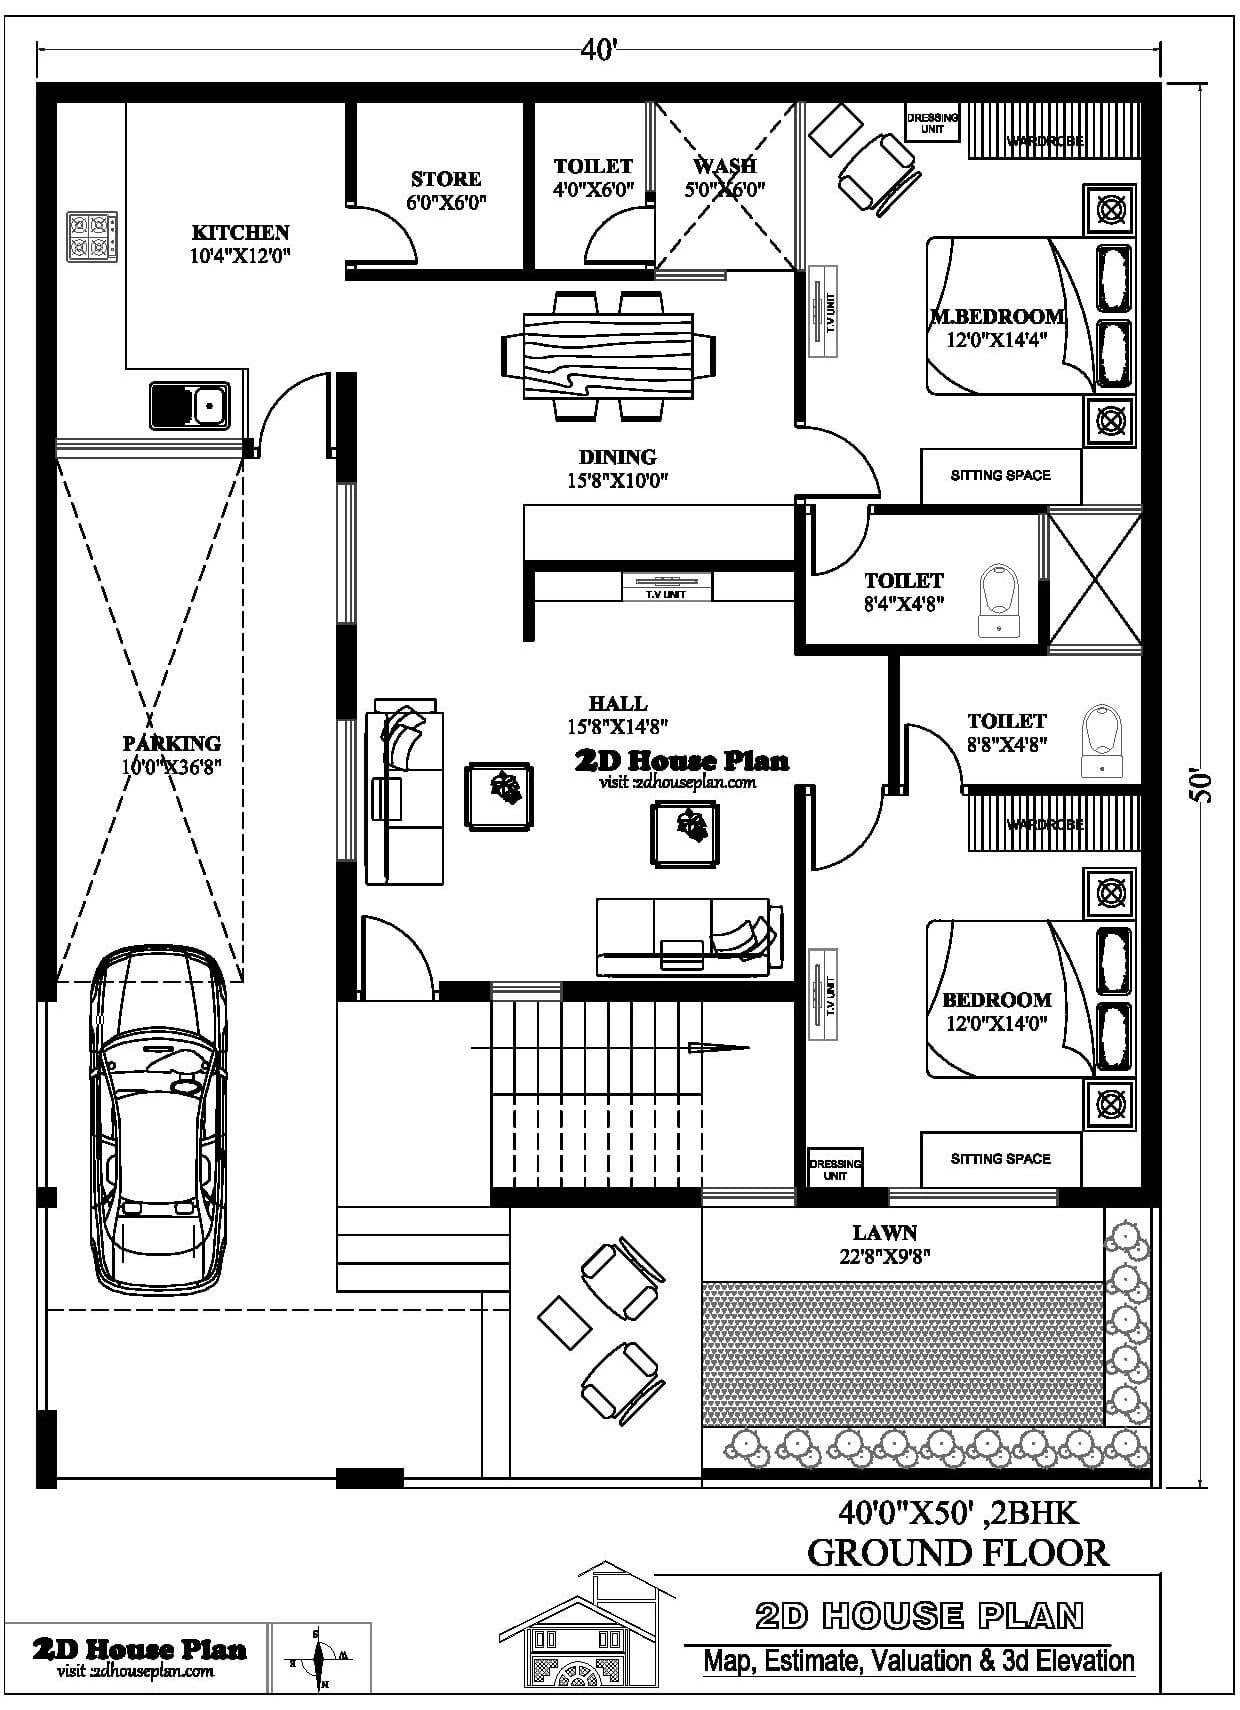 Archaïsch Regan Nutteloos 40 50 house plans | Best 3bhk & 4bhk house plan in 2000 sqft